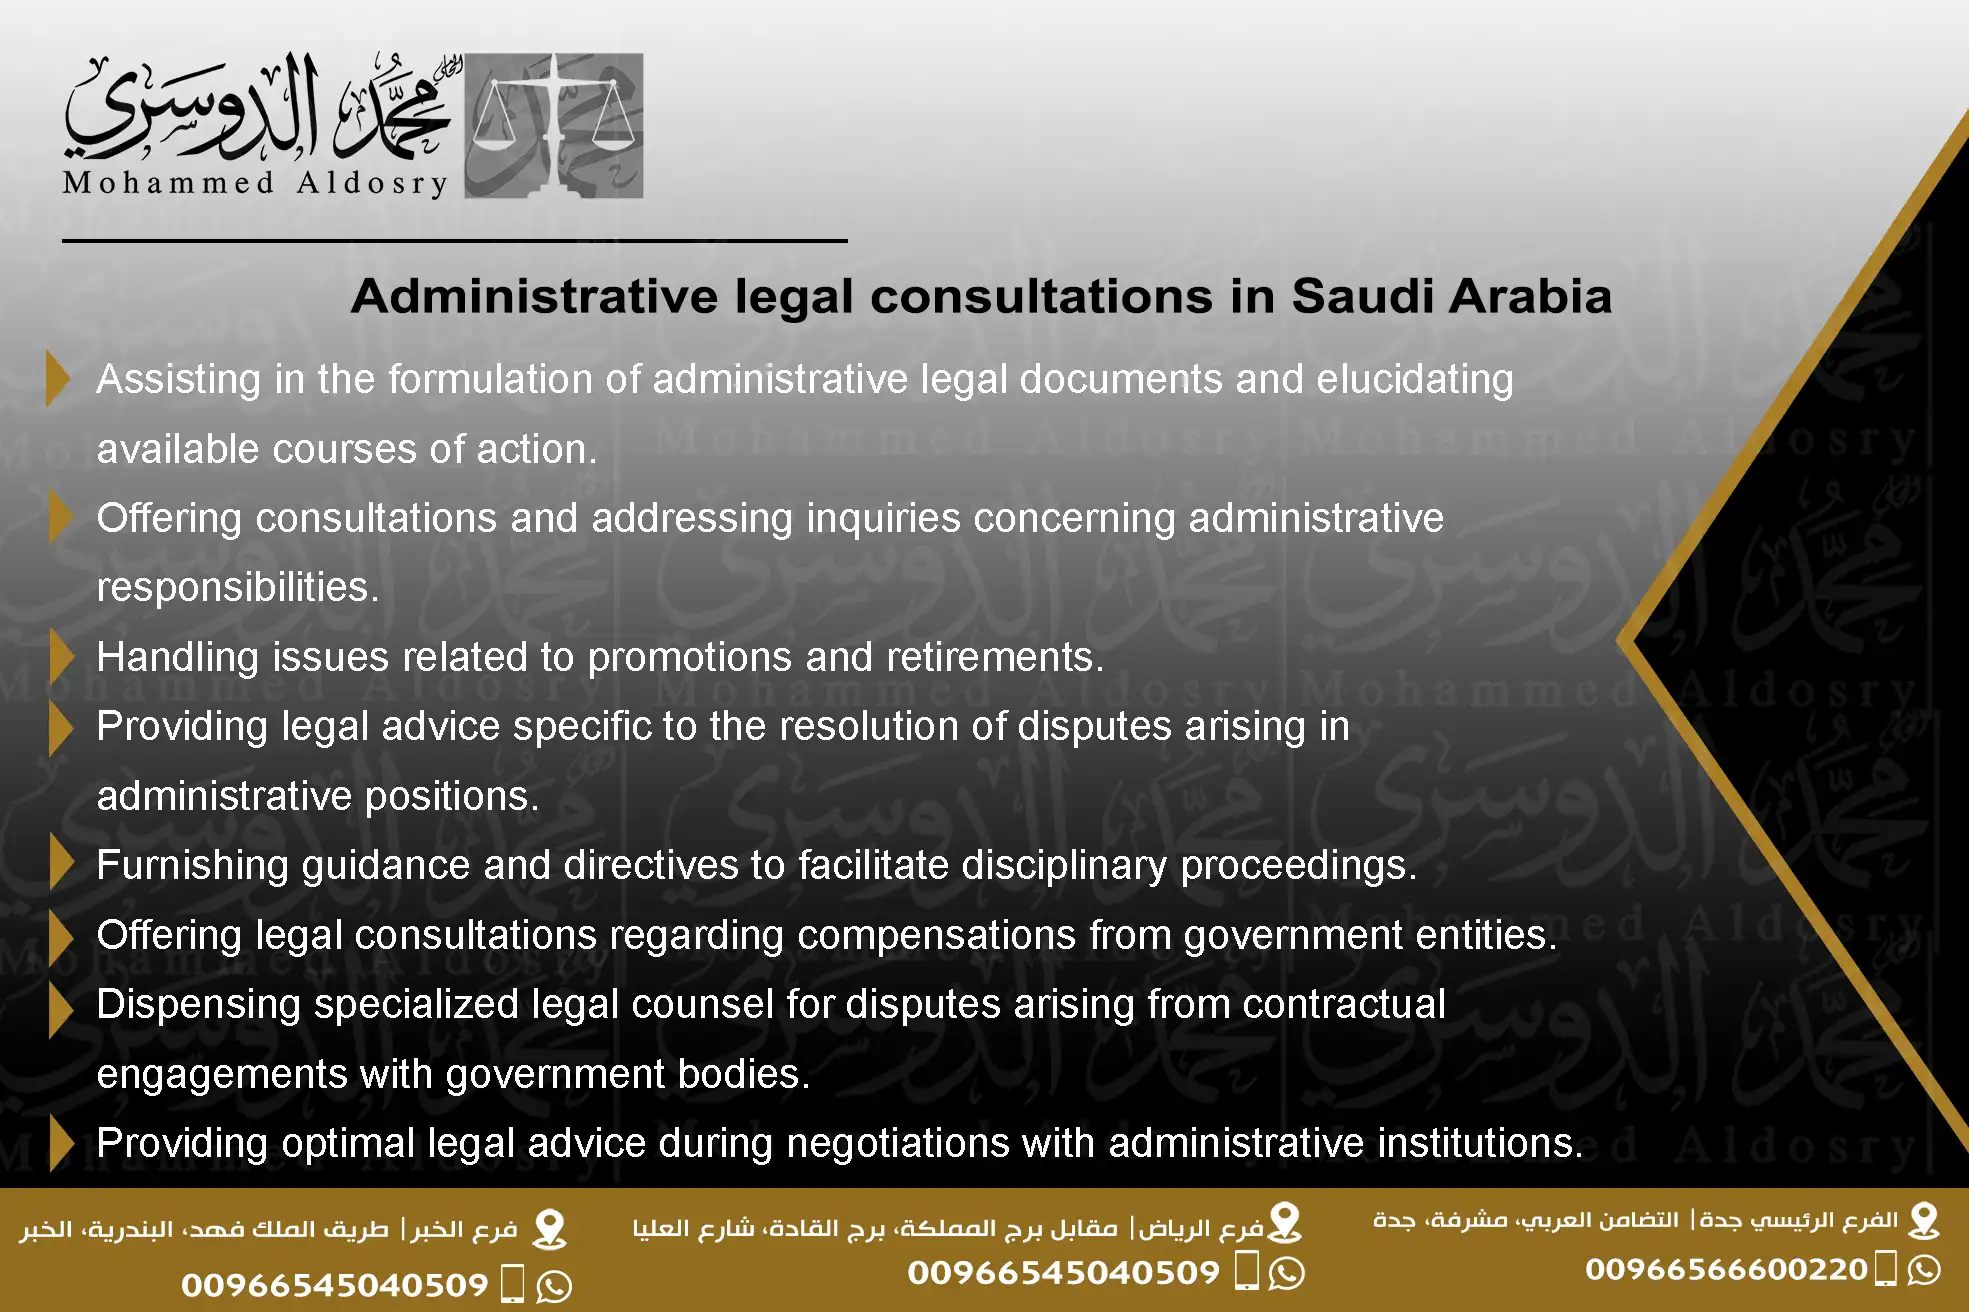 Administrative legal consultations in Saudi Arabia